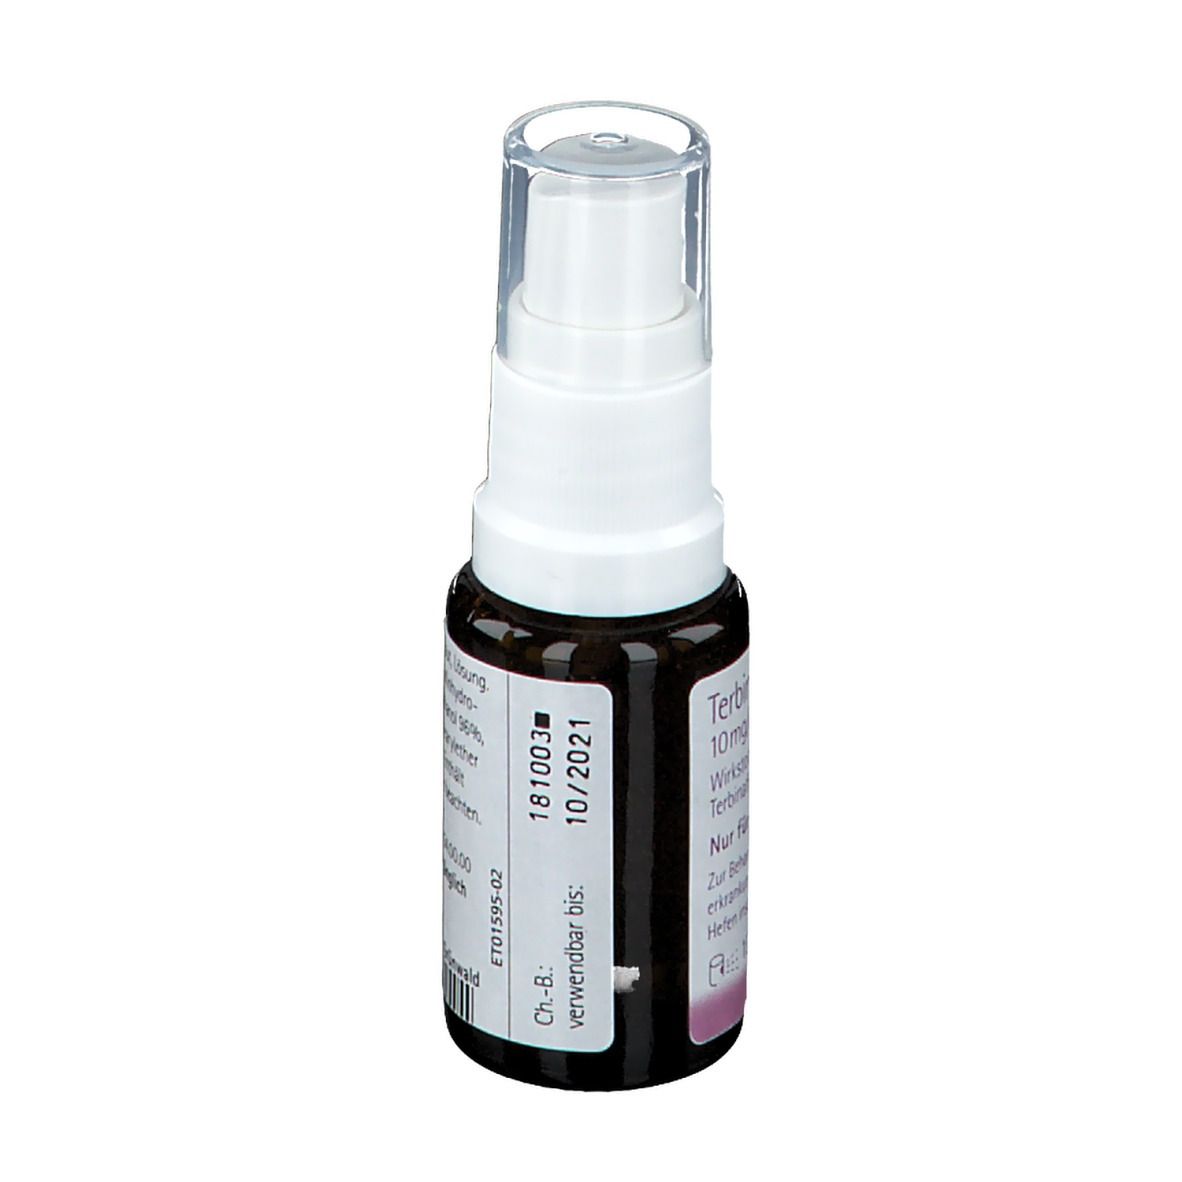 Terbinafin HCL acis® 10mg/g Spray